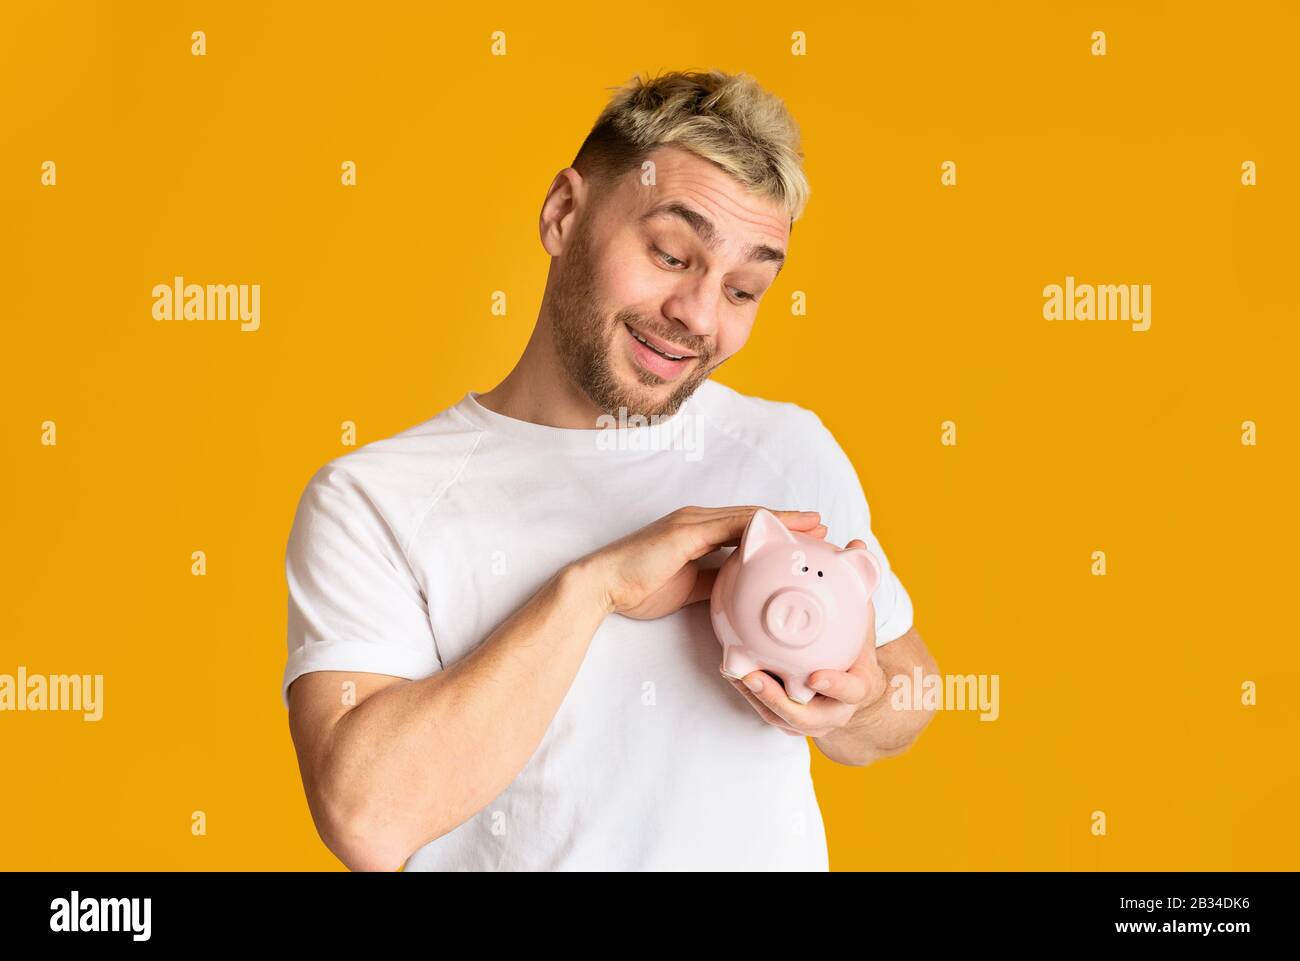 Saving concept. Ridiculous guy stroking piggy bank Stock Photo